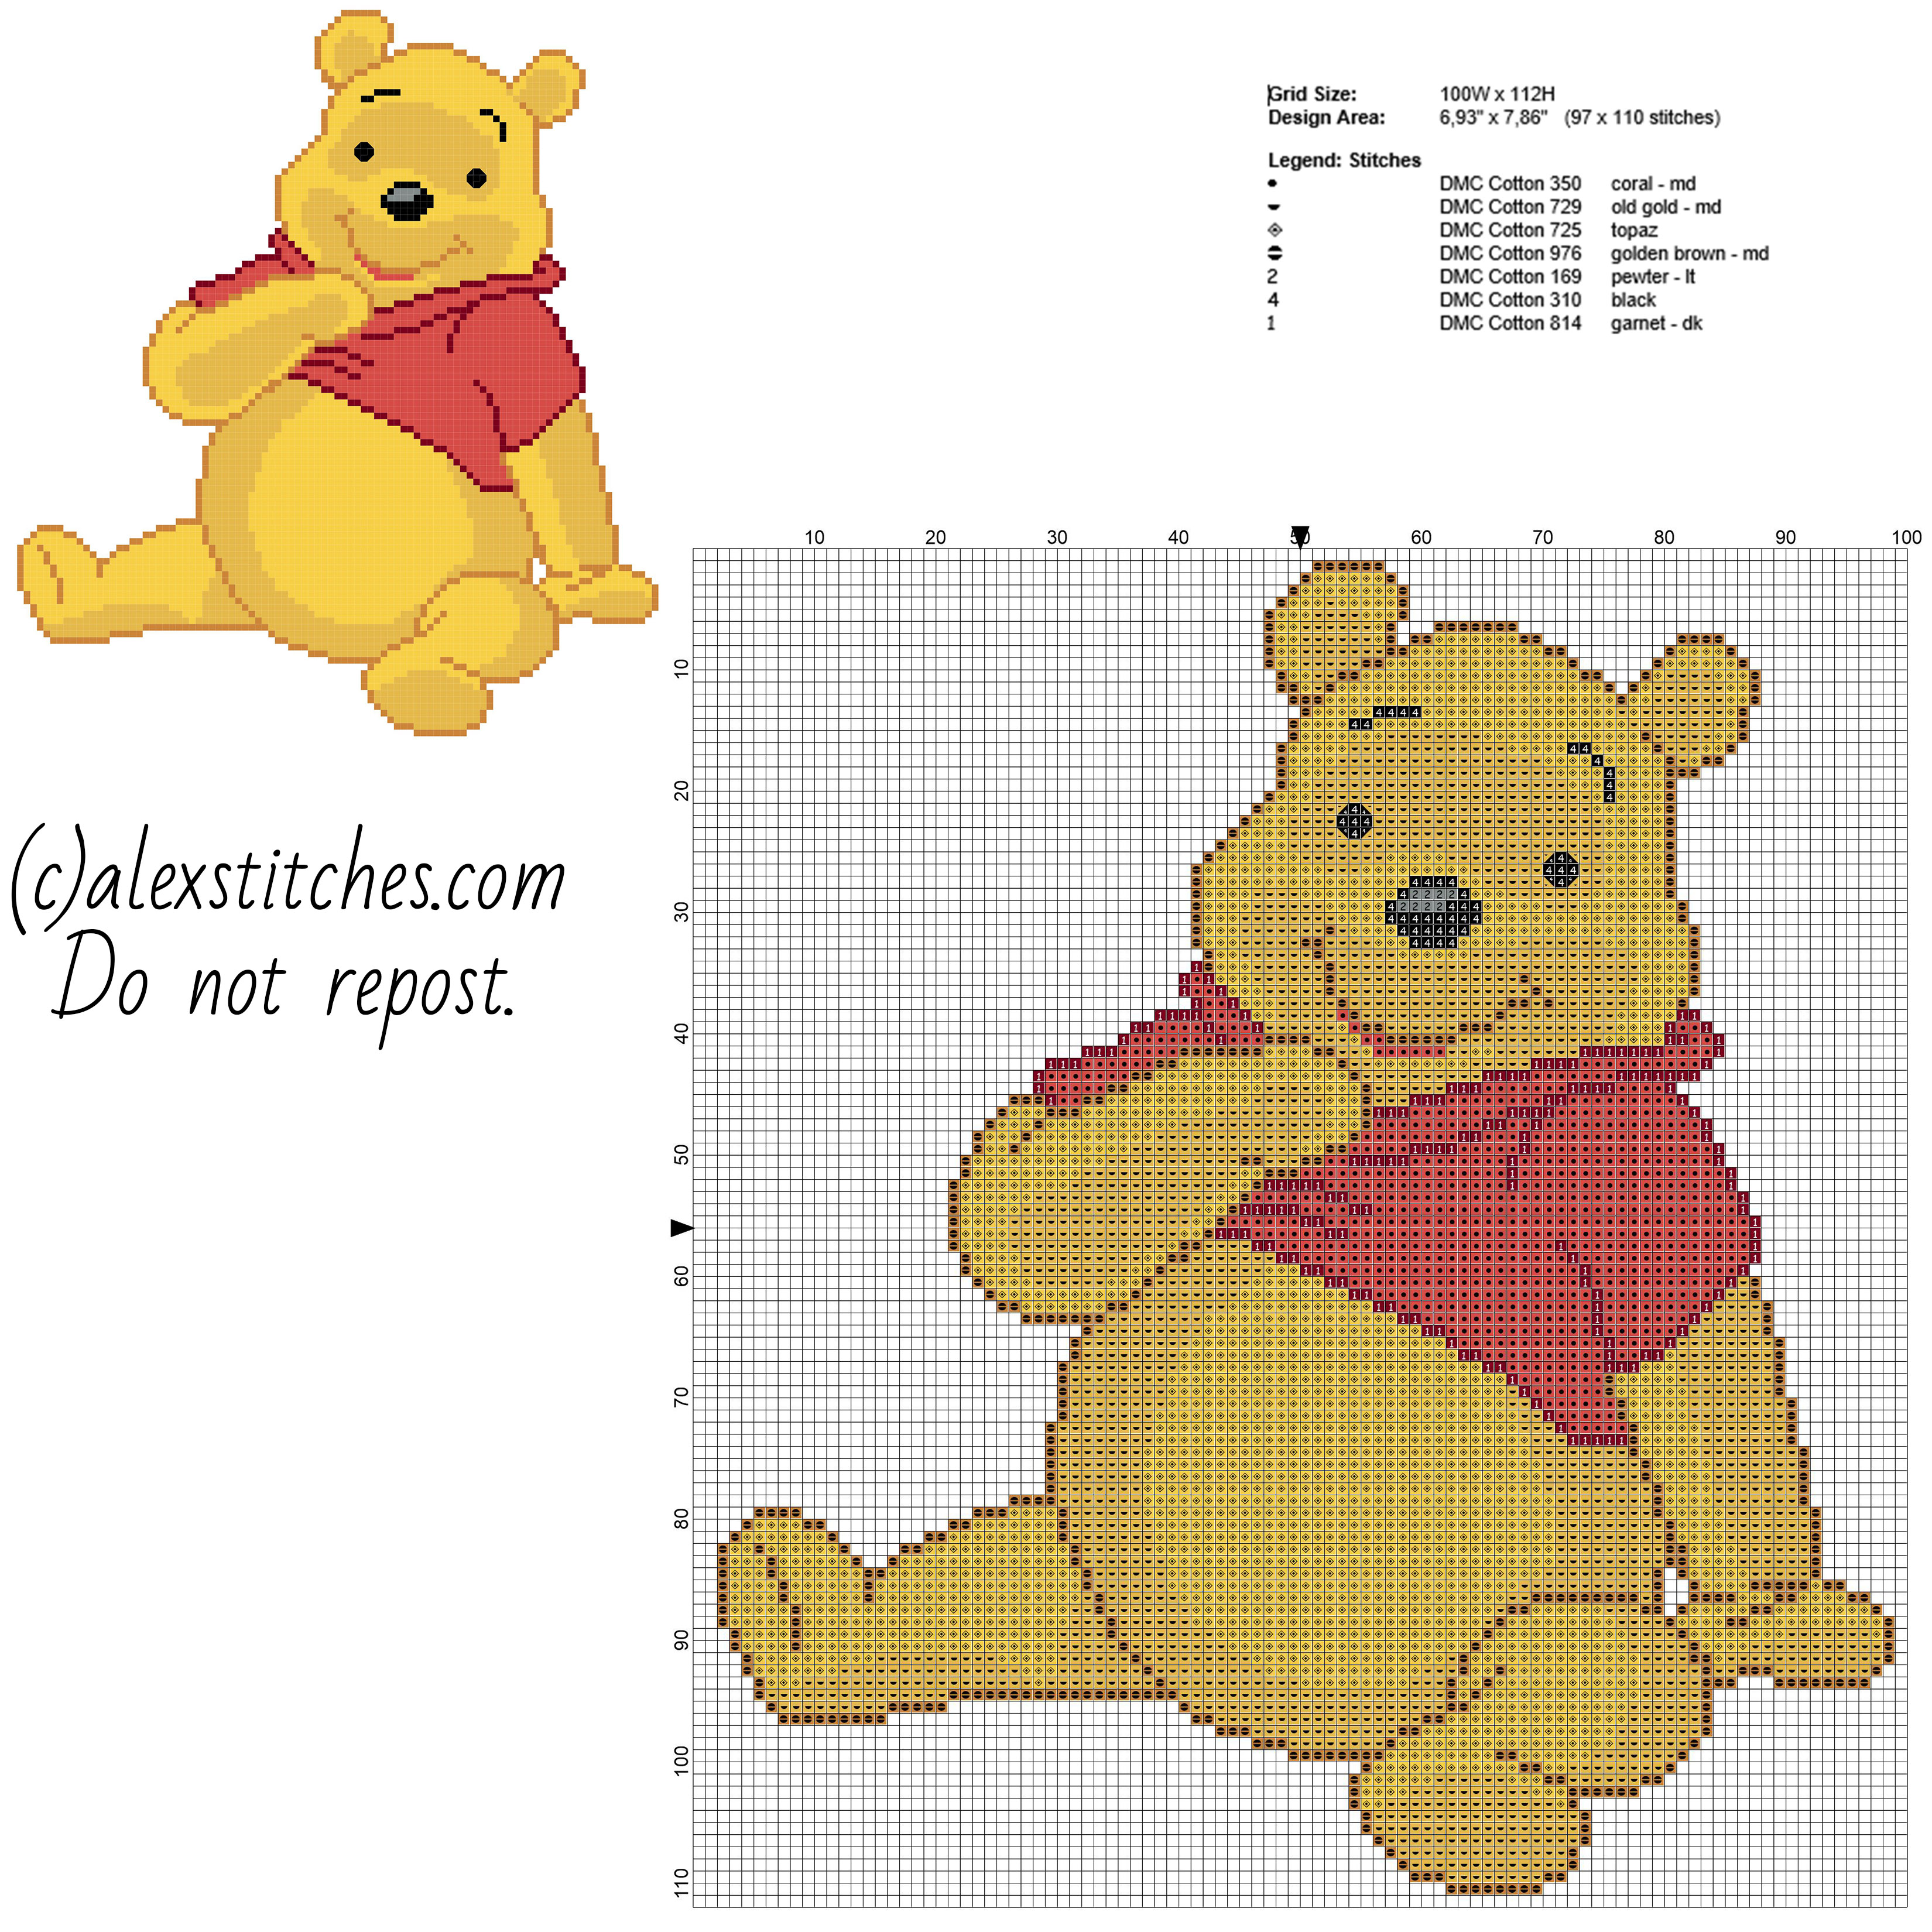 Winnie The Pooh sitting free cross stitch pattern size 97 x 110 stitches and 7 dmc threads